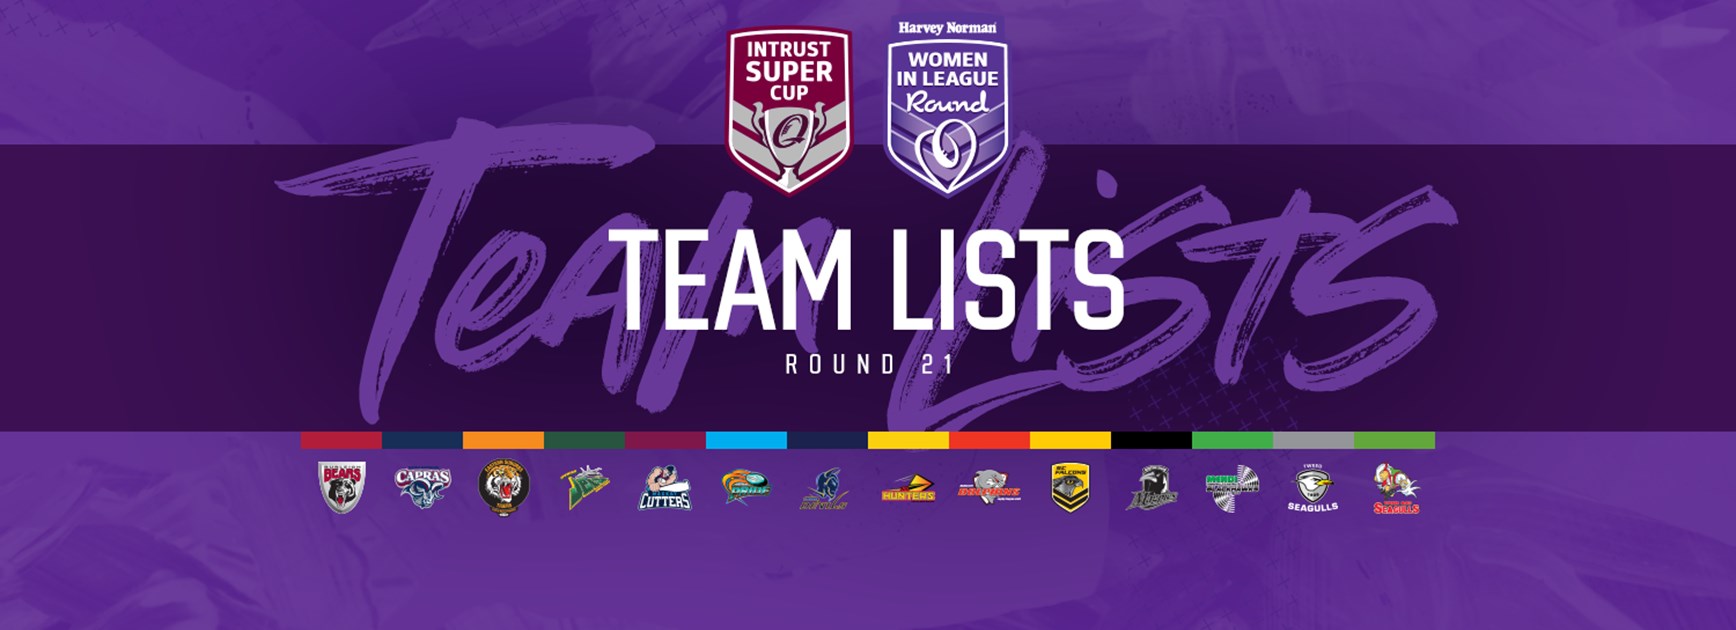 Intrust Super Cup Round 21 team lists